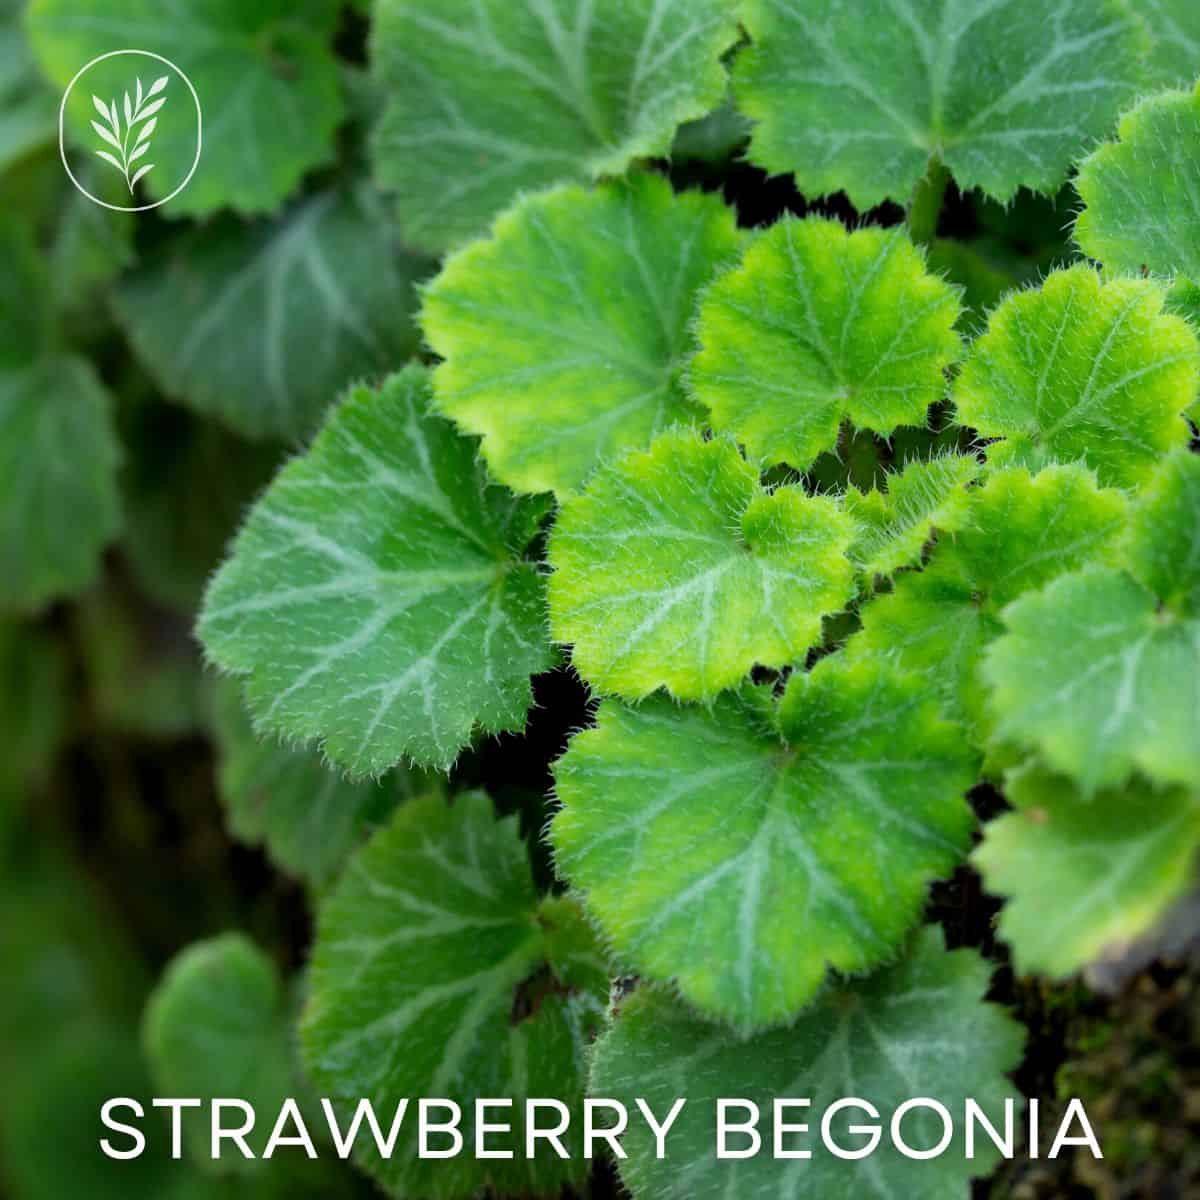 Strawberry begonia via @home4theharvest